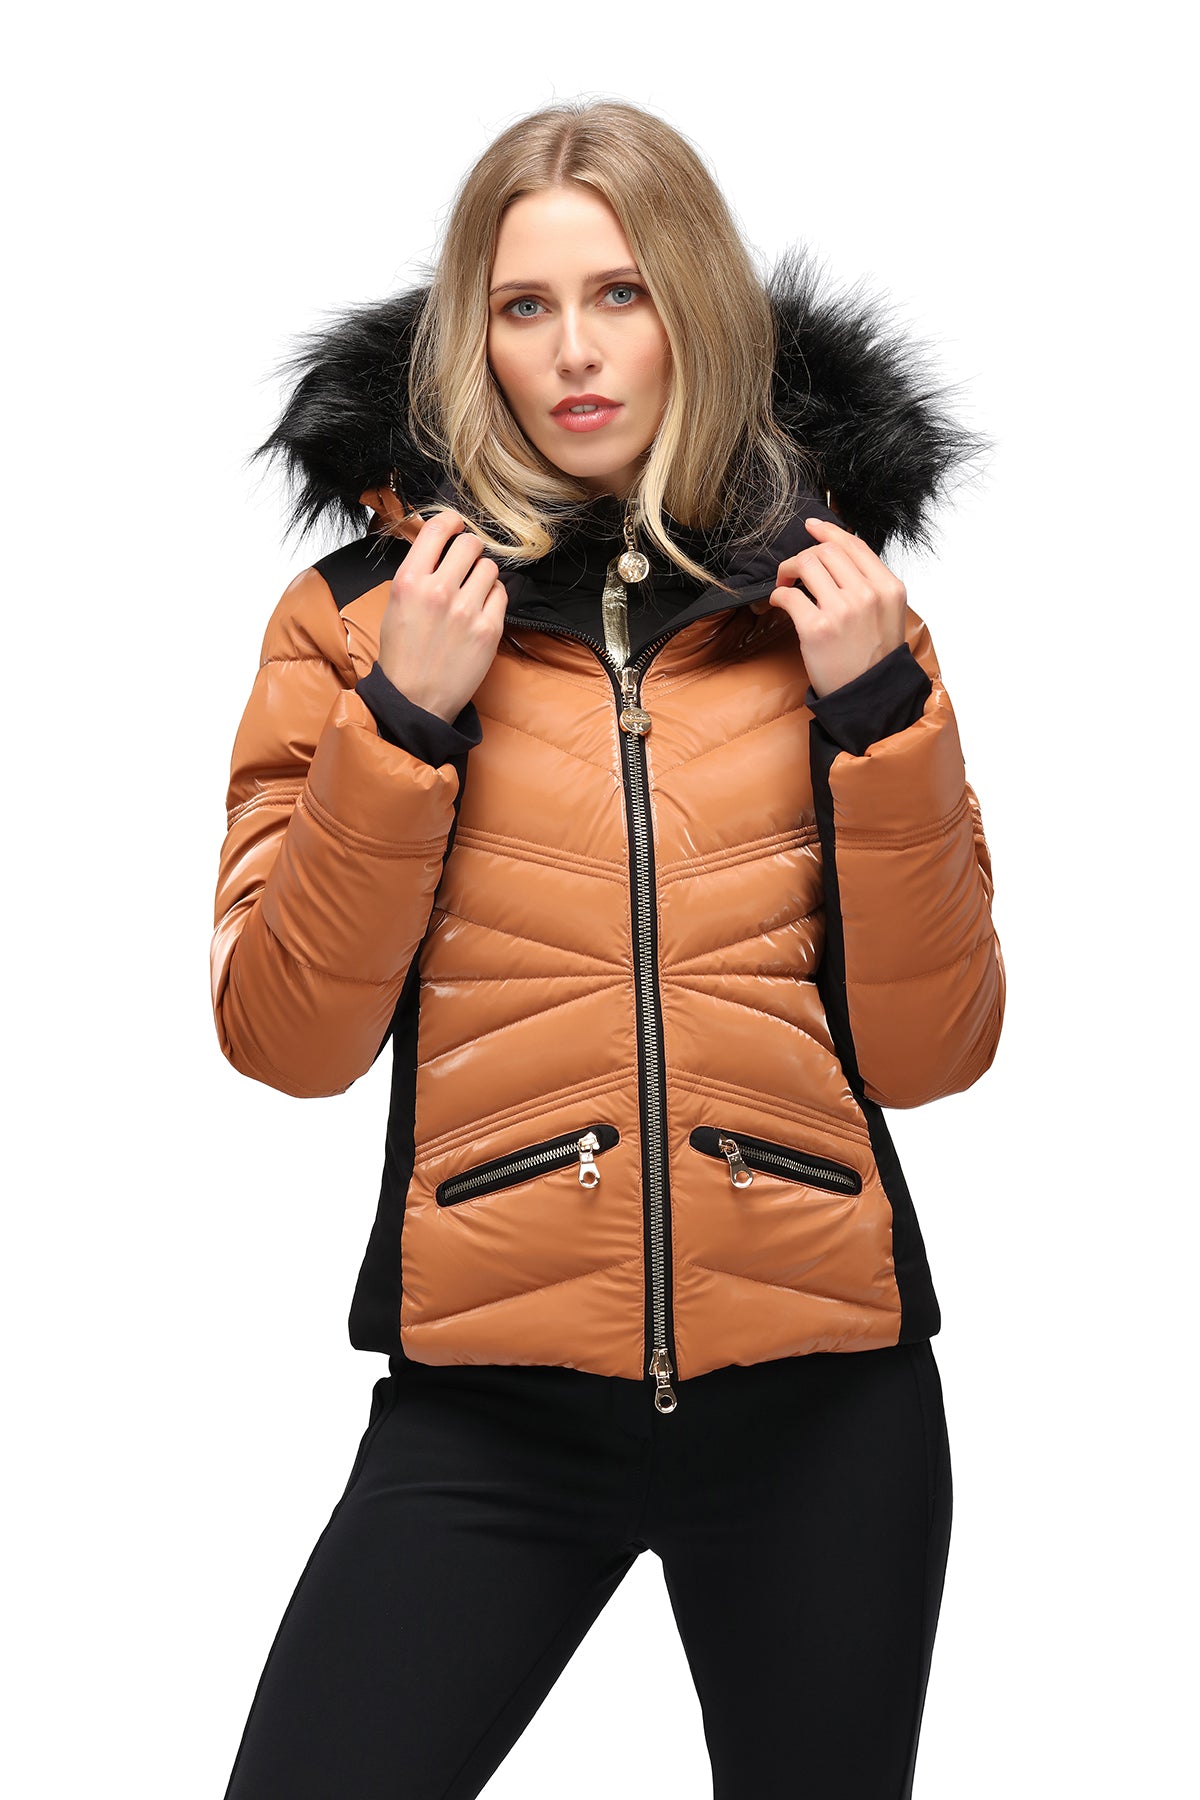 High Society Alyssa Marone Down Ski Jacket with Faux Fur Hood